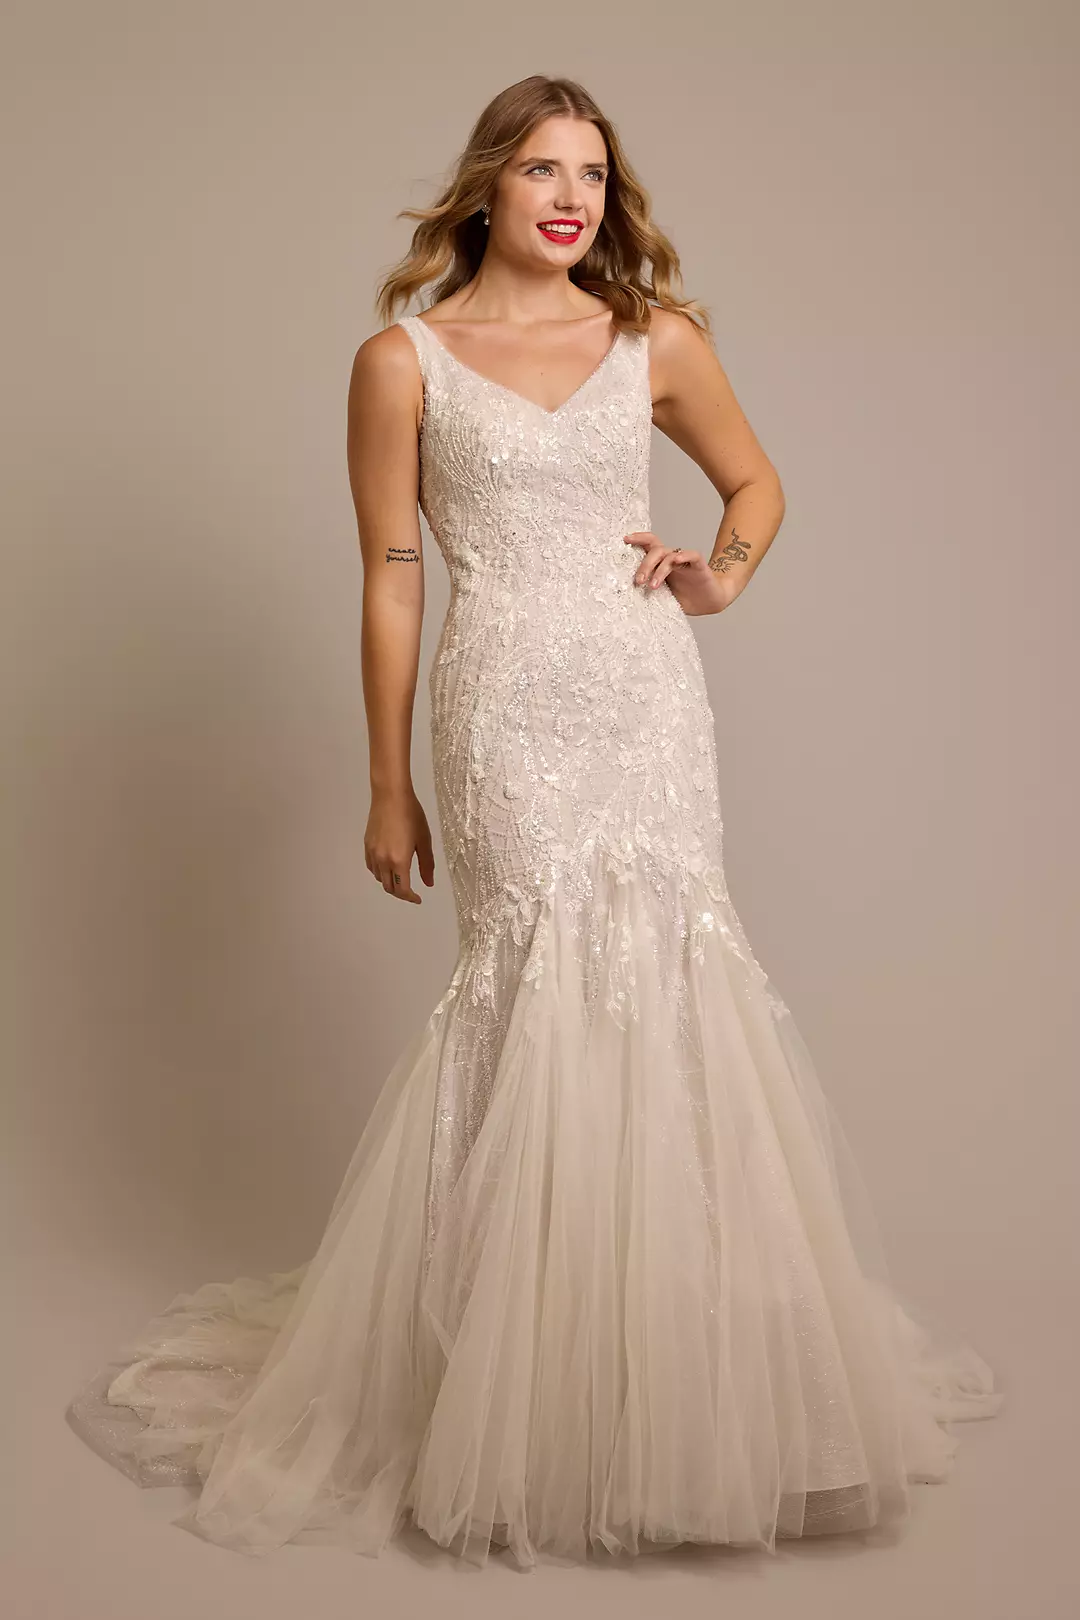 Beaded Lace Applique Tulle Mermaid Wedding Dress Image